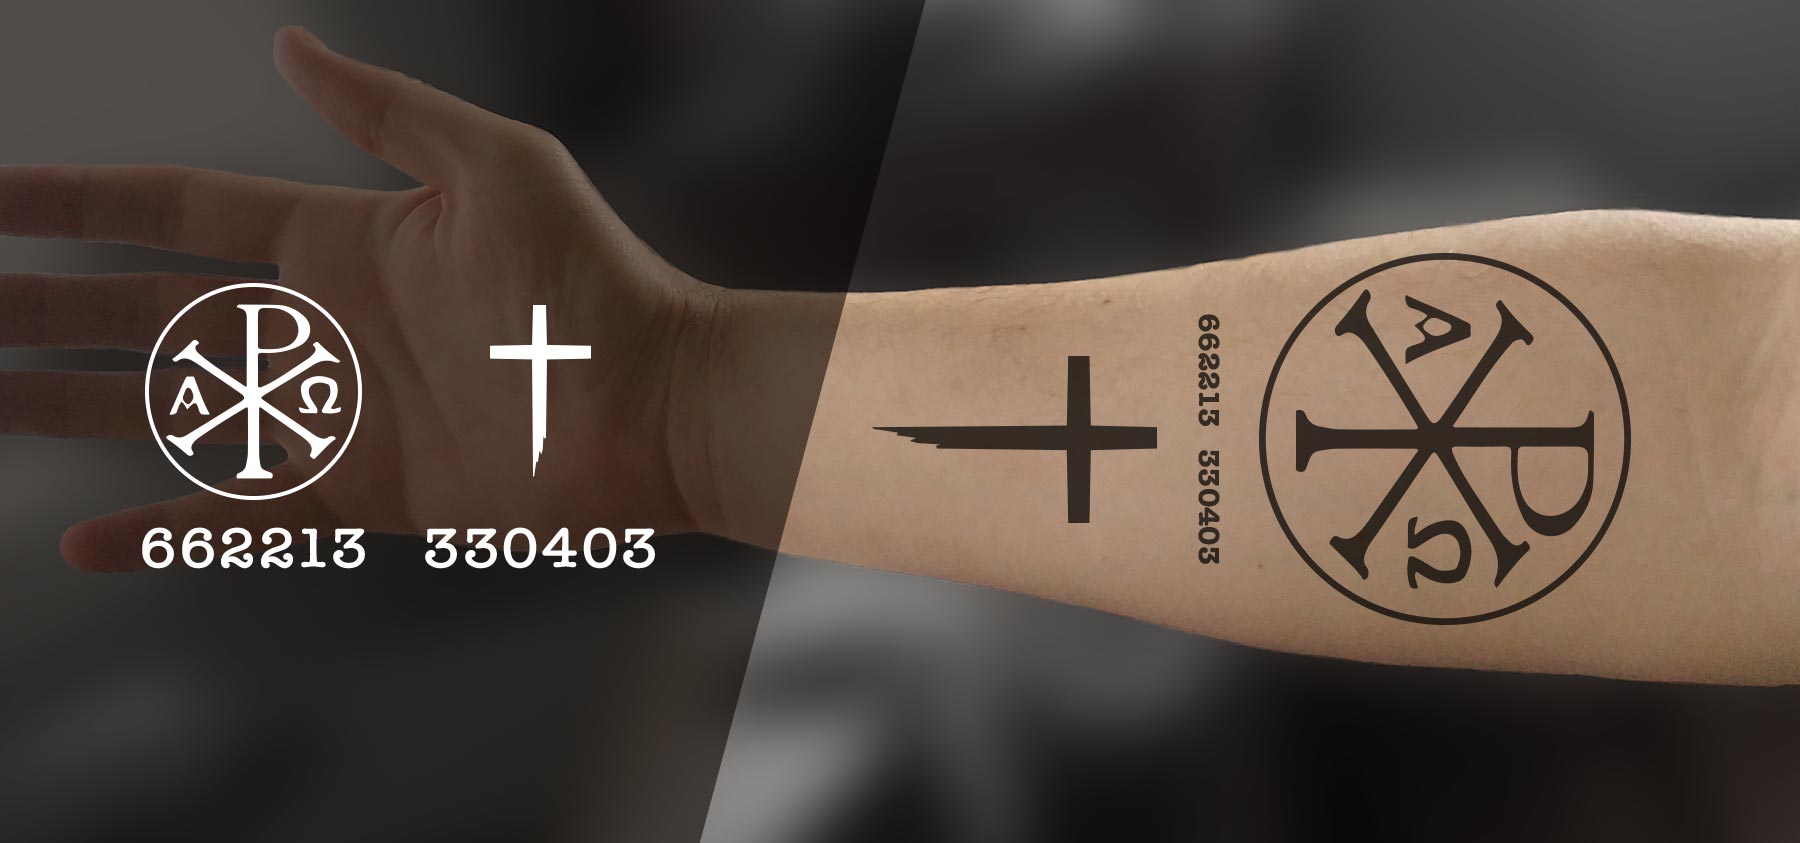 Christian Cross Tattoo Designs Silhouette Stock Illustrations RoyaltyFree  Vector Graphics  Clip Art  iStock